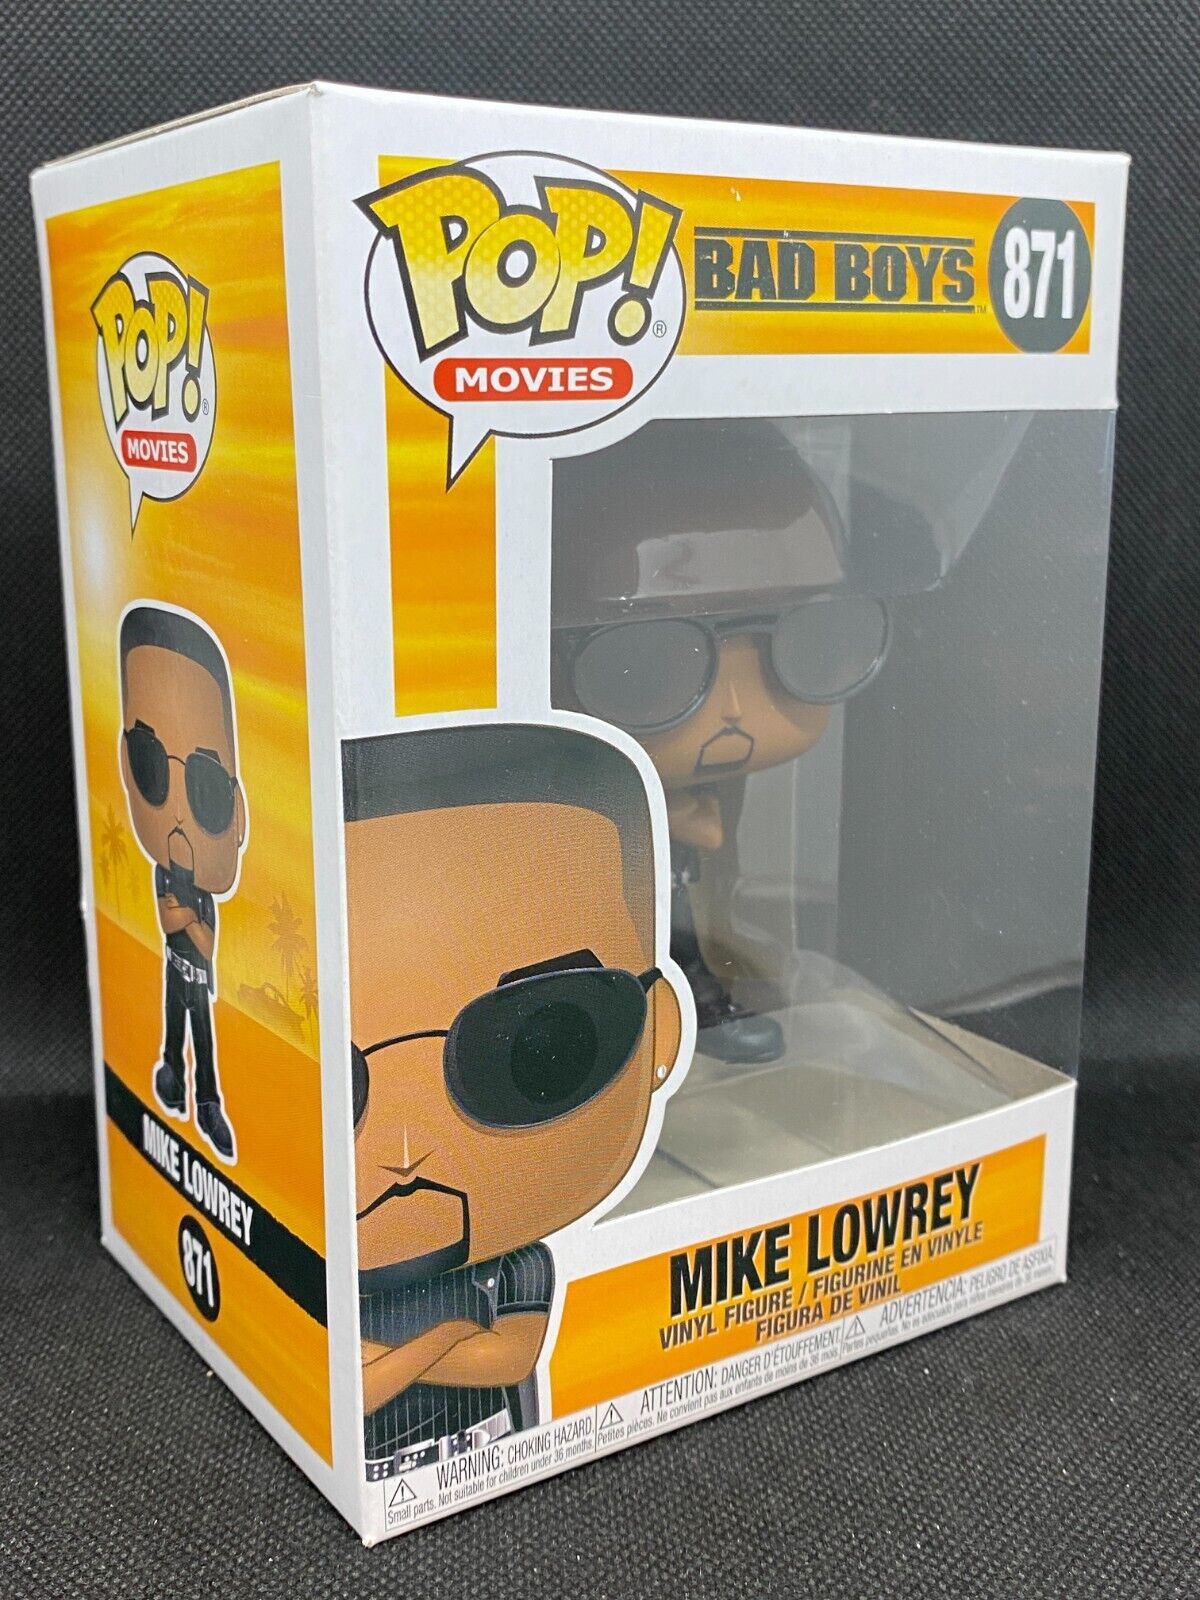 Funko Pop Mike Lowrey 871 Bad Boys Movies Vinyl Figure